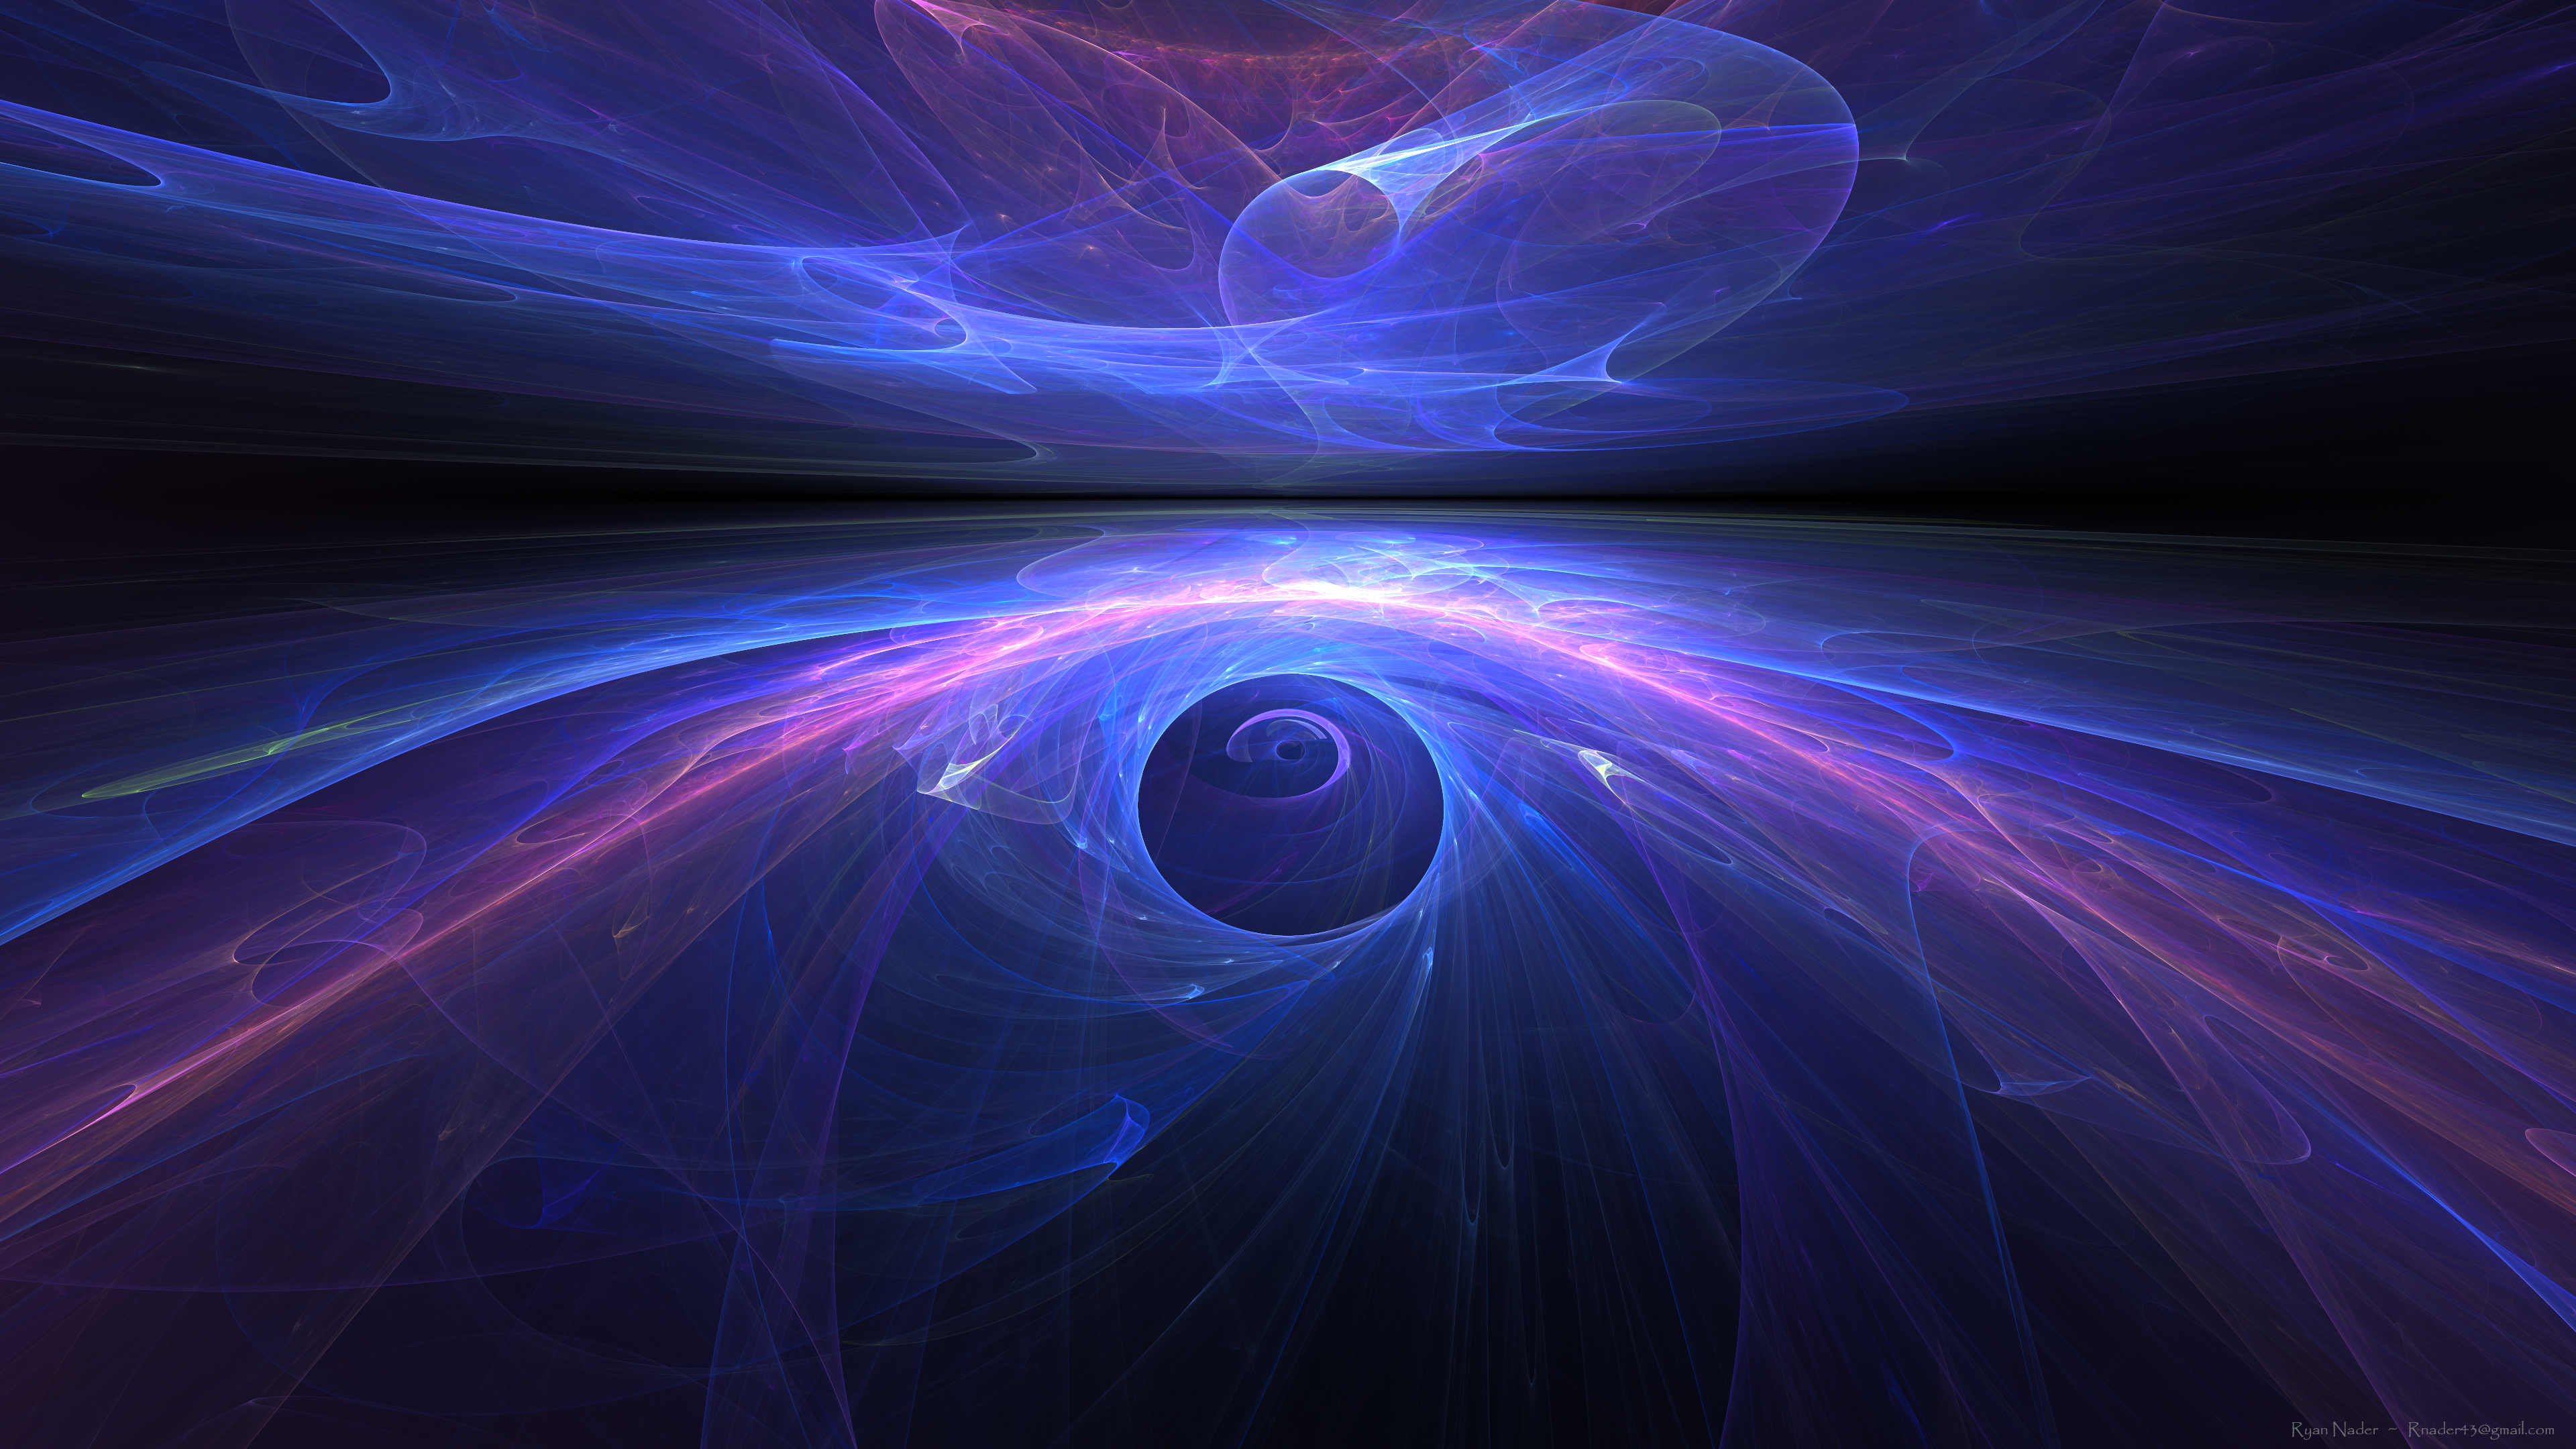 Wallpaper, purple background, fractal flame, Apophysis, abstract, 3D fractal, portal 3840x2160